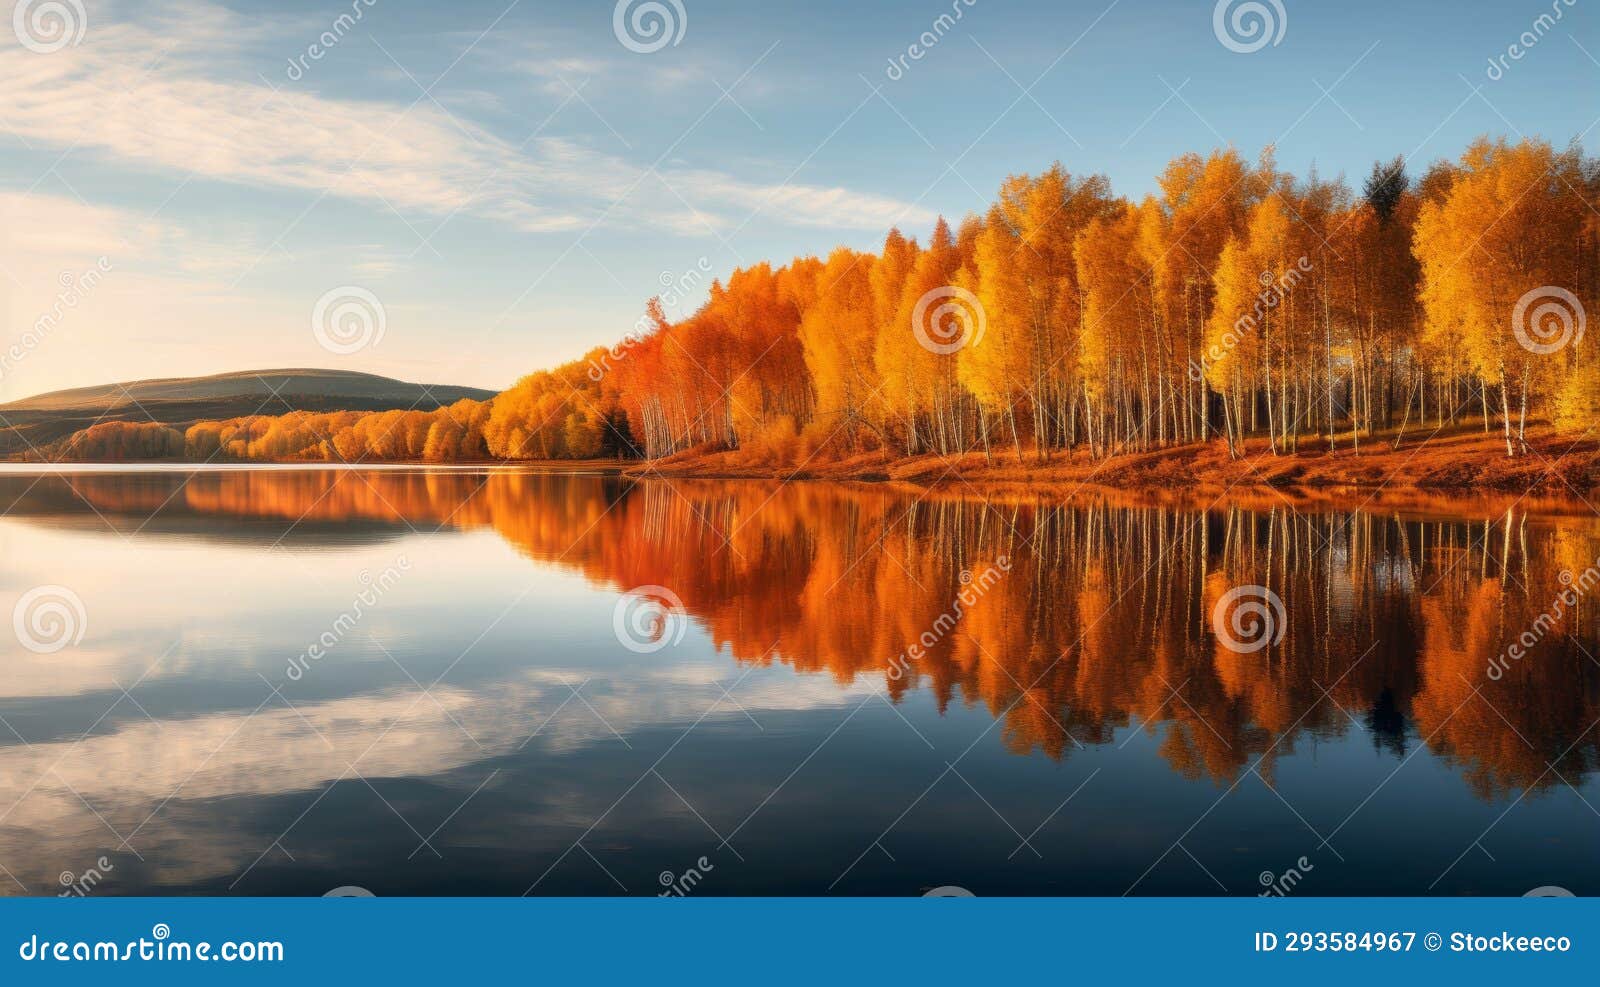 autumn reflections: eilif peterssen inspired romantic landscapes